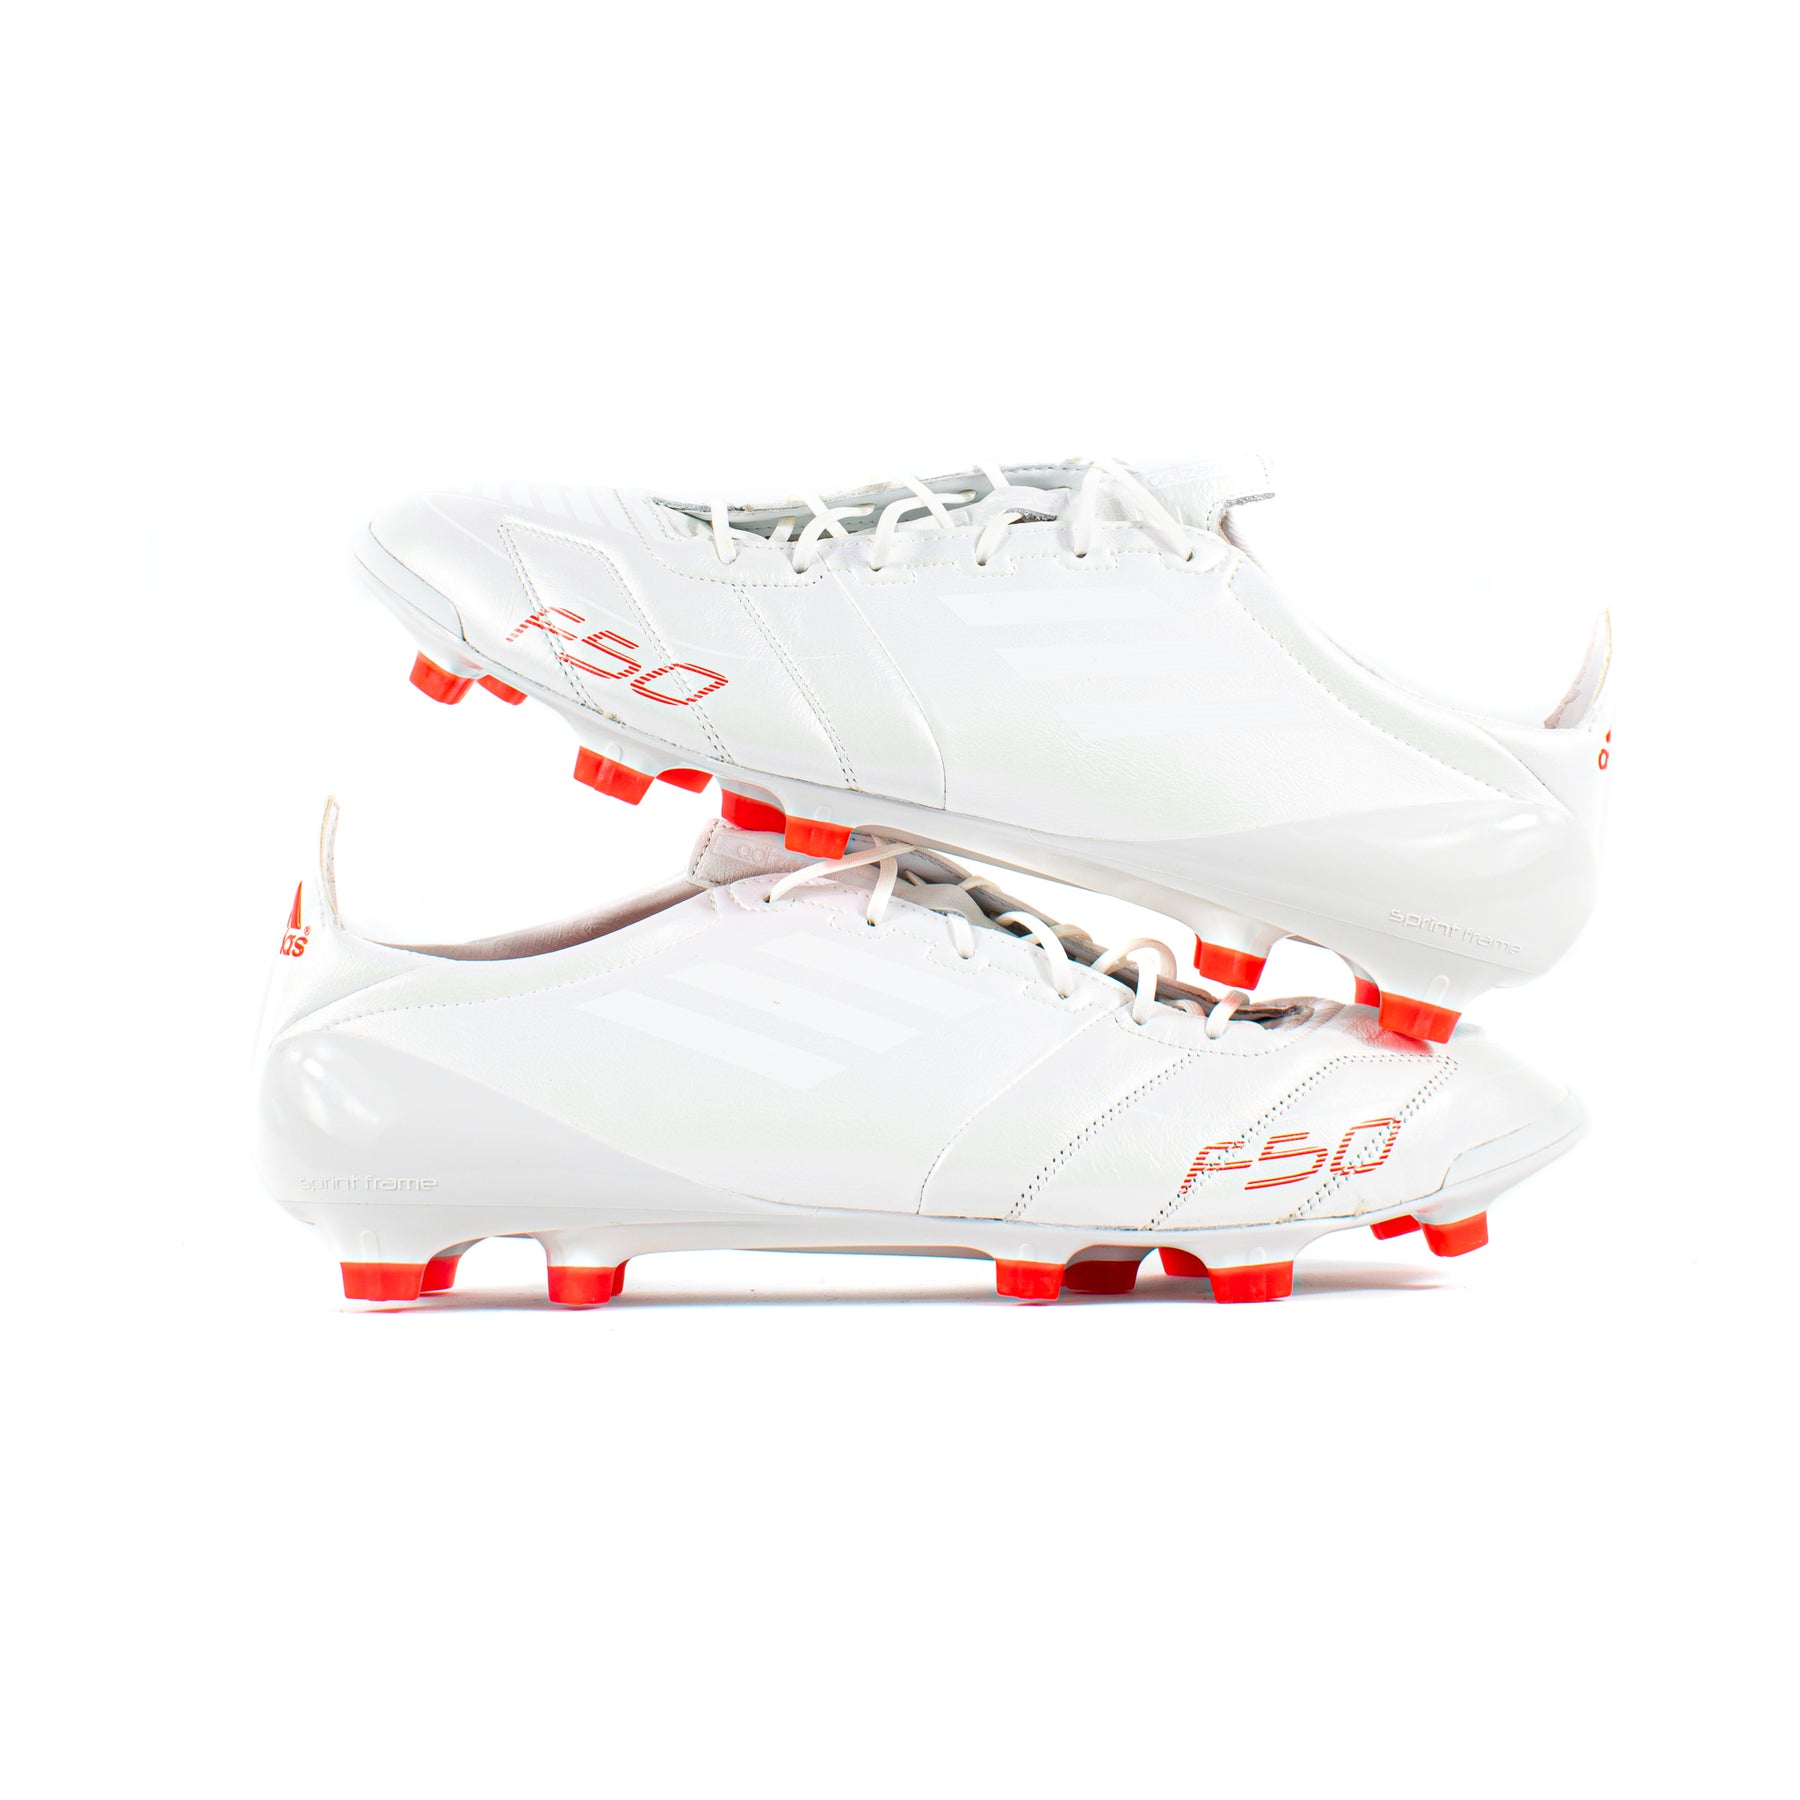 Adidas Adizero Whiteout FG – Classic Soccer Cleats